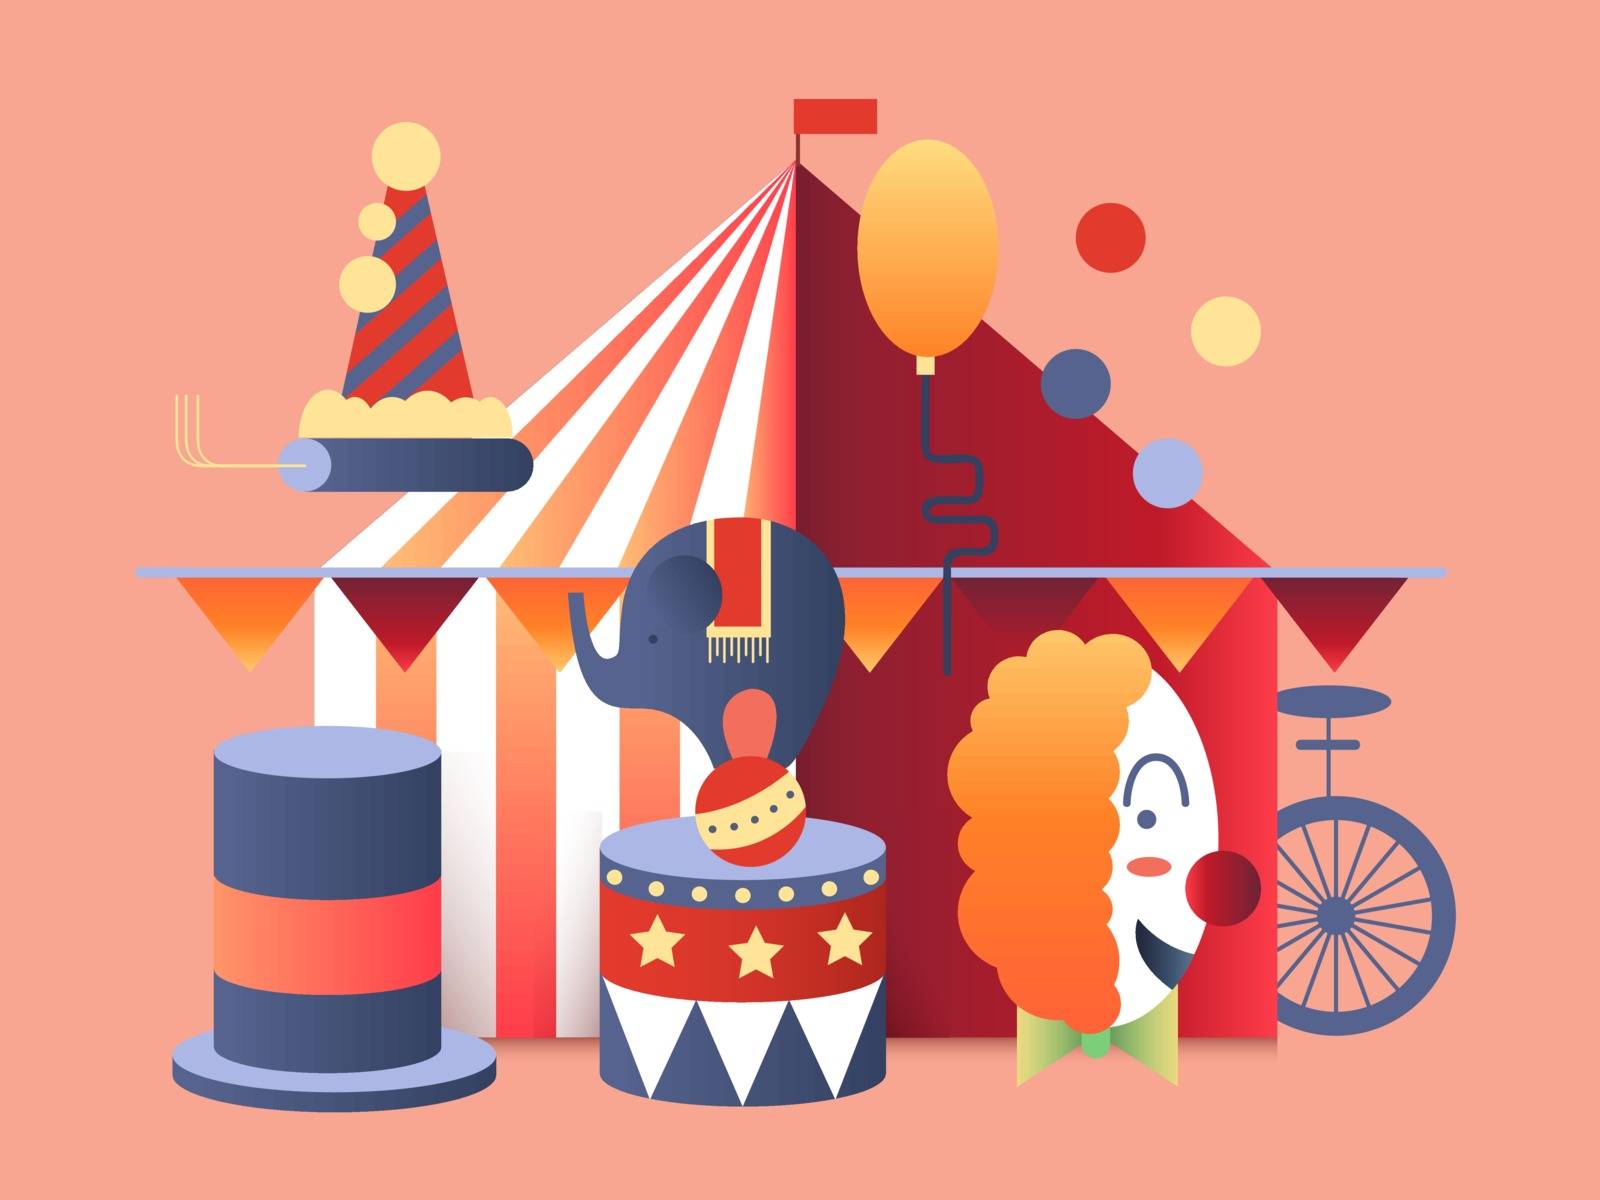 Circus tent design. Festival entertainment, carnival amusement, fun show event. Vector illustration